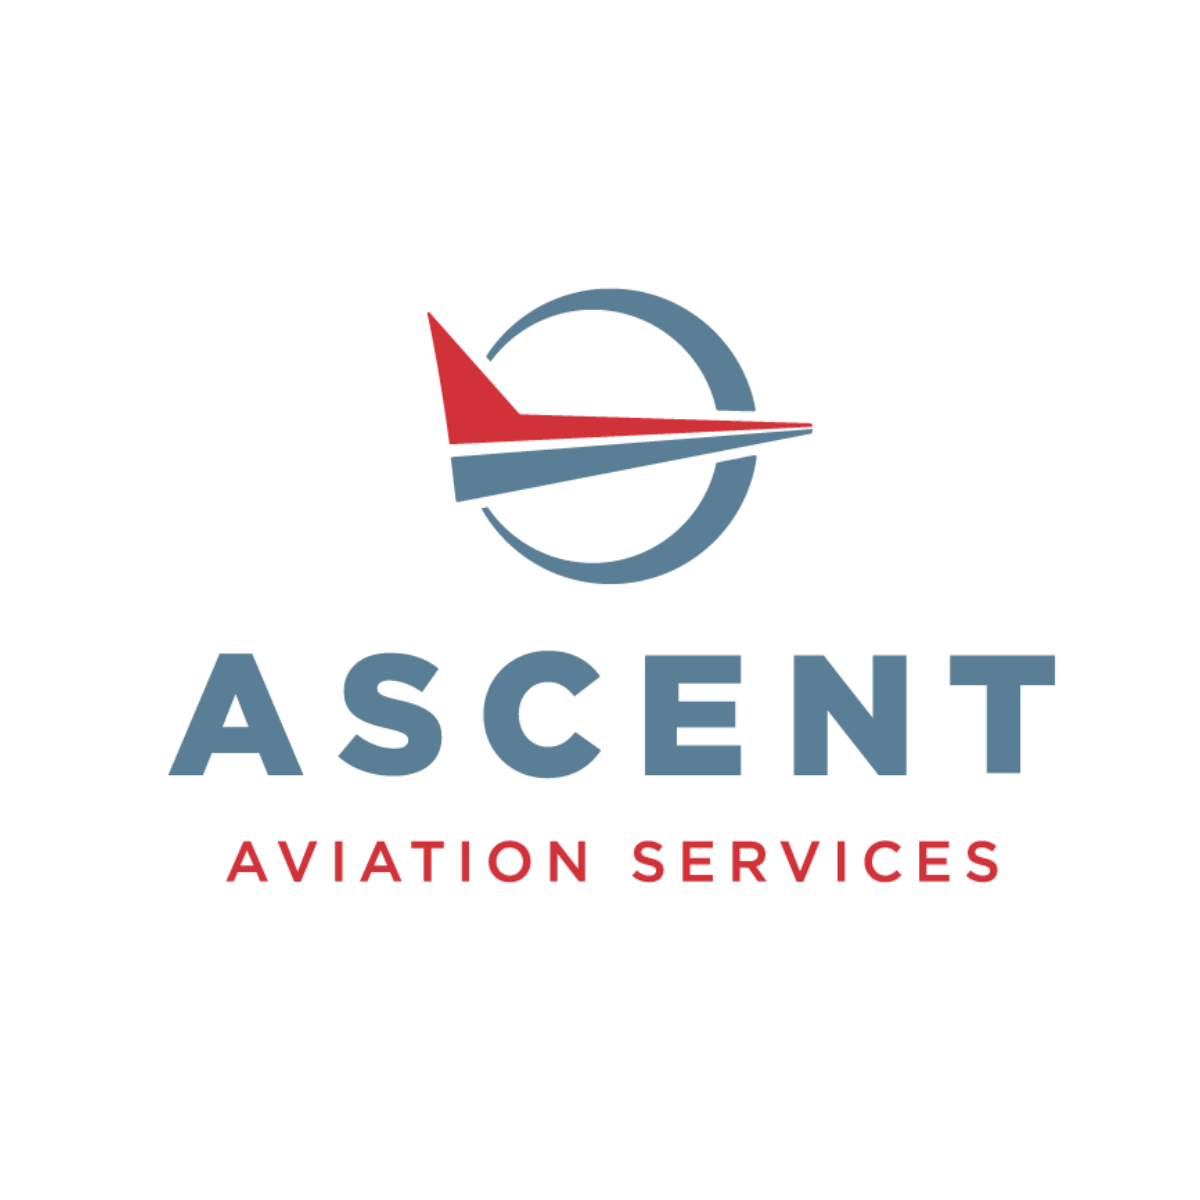 Ascent Aviation Academy Flight School van nuys. Aircraft service Company. Ascent Aviation Academy Flight School van nuys здание. Terrport Aviation services Ltd Company. Aviation services